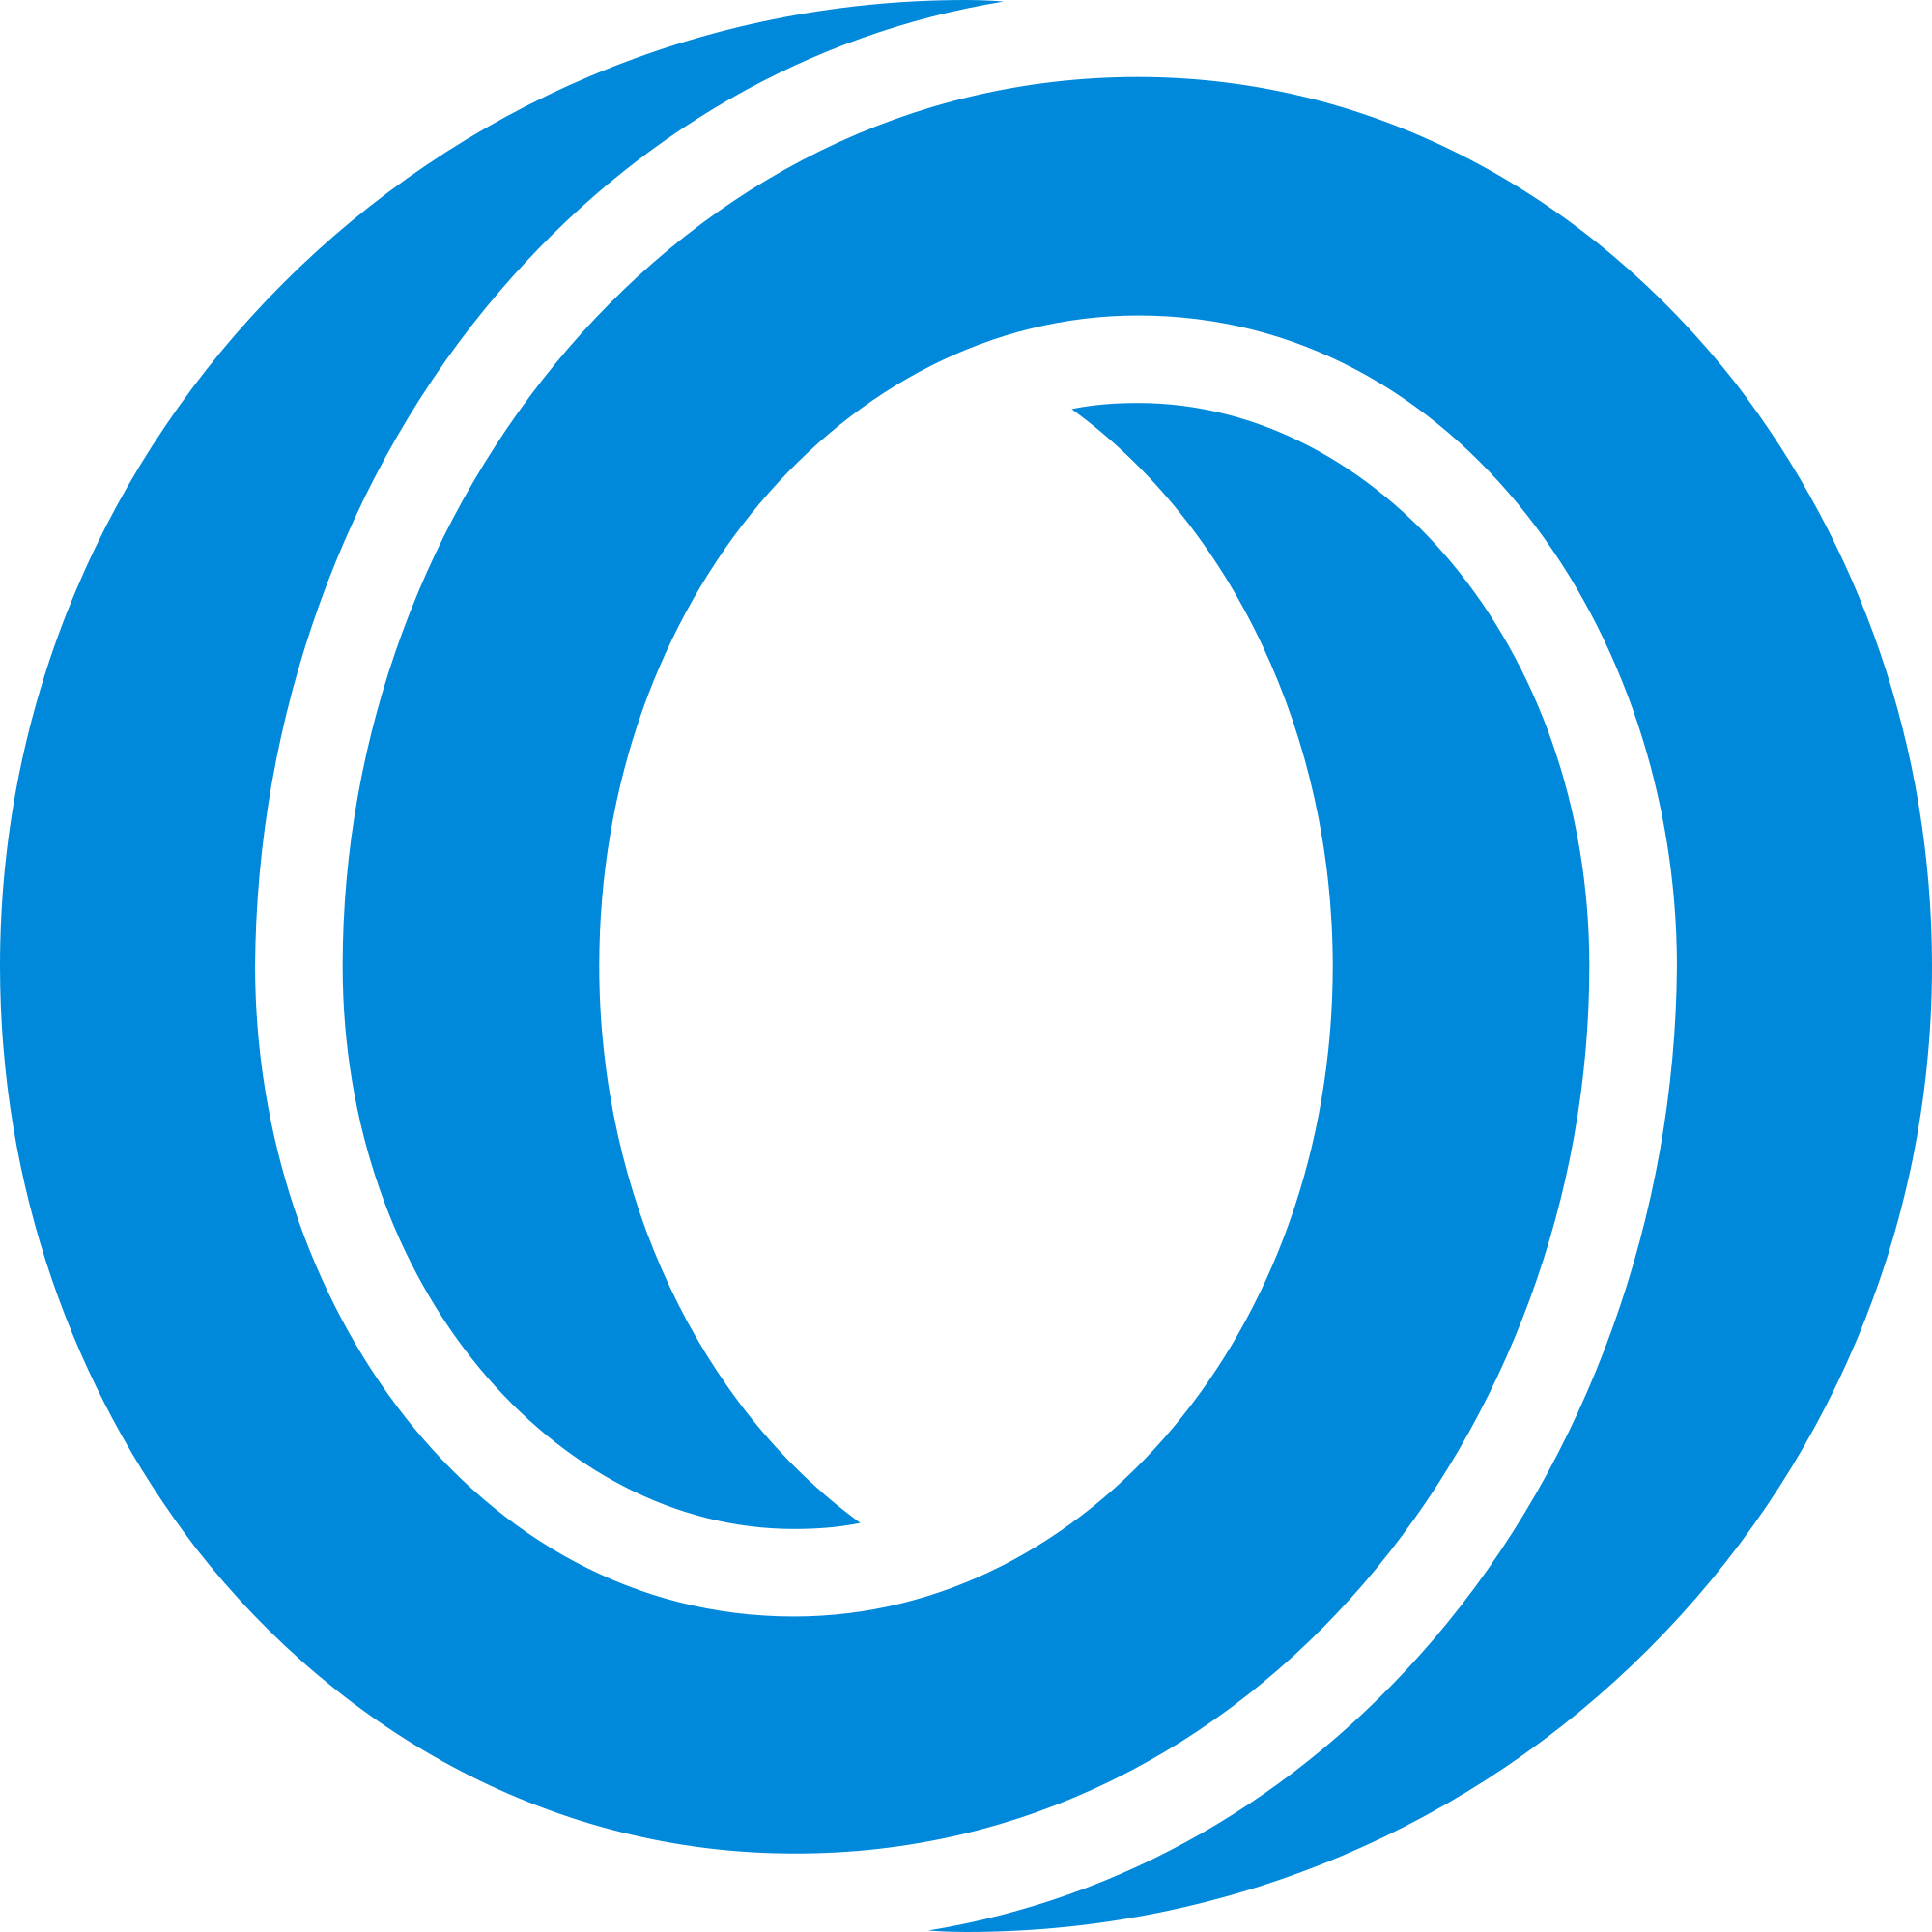 OasisNetwork logo two white blue swirls forming an O